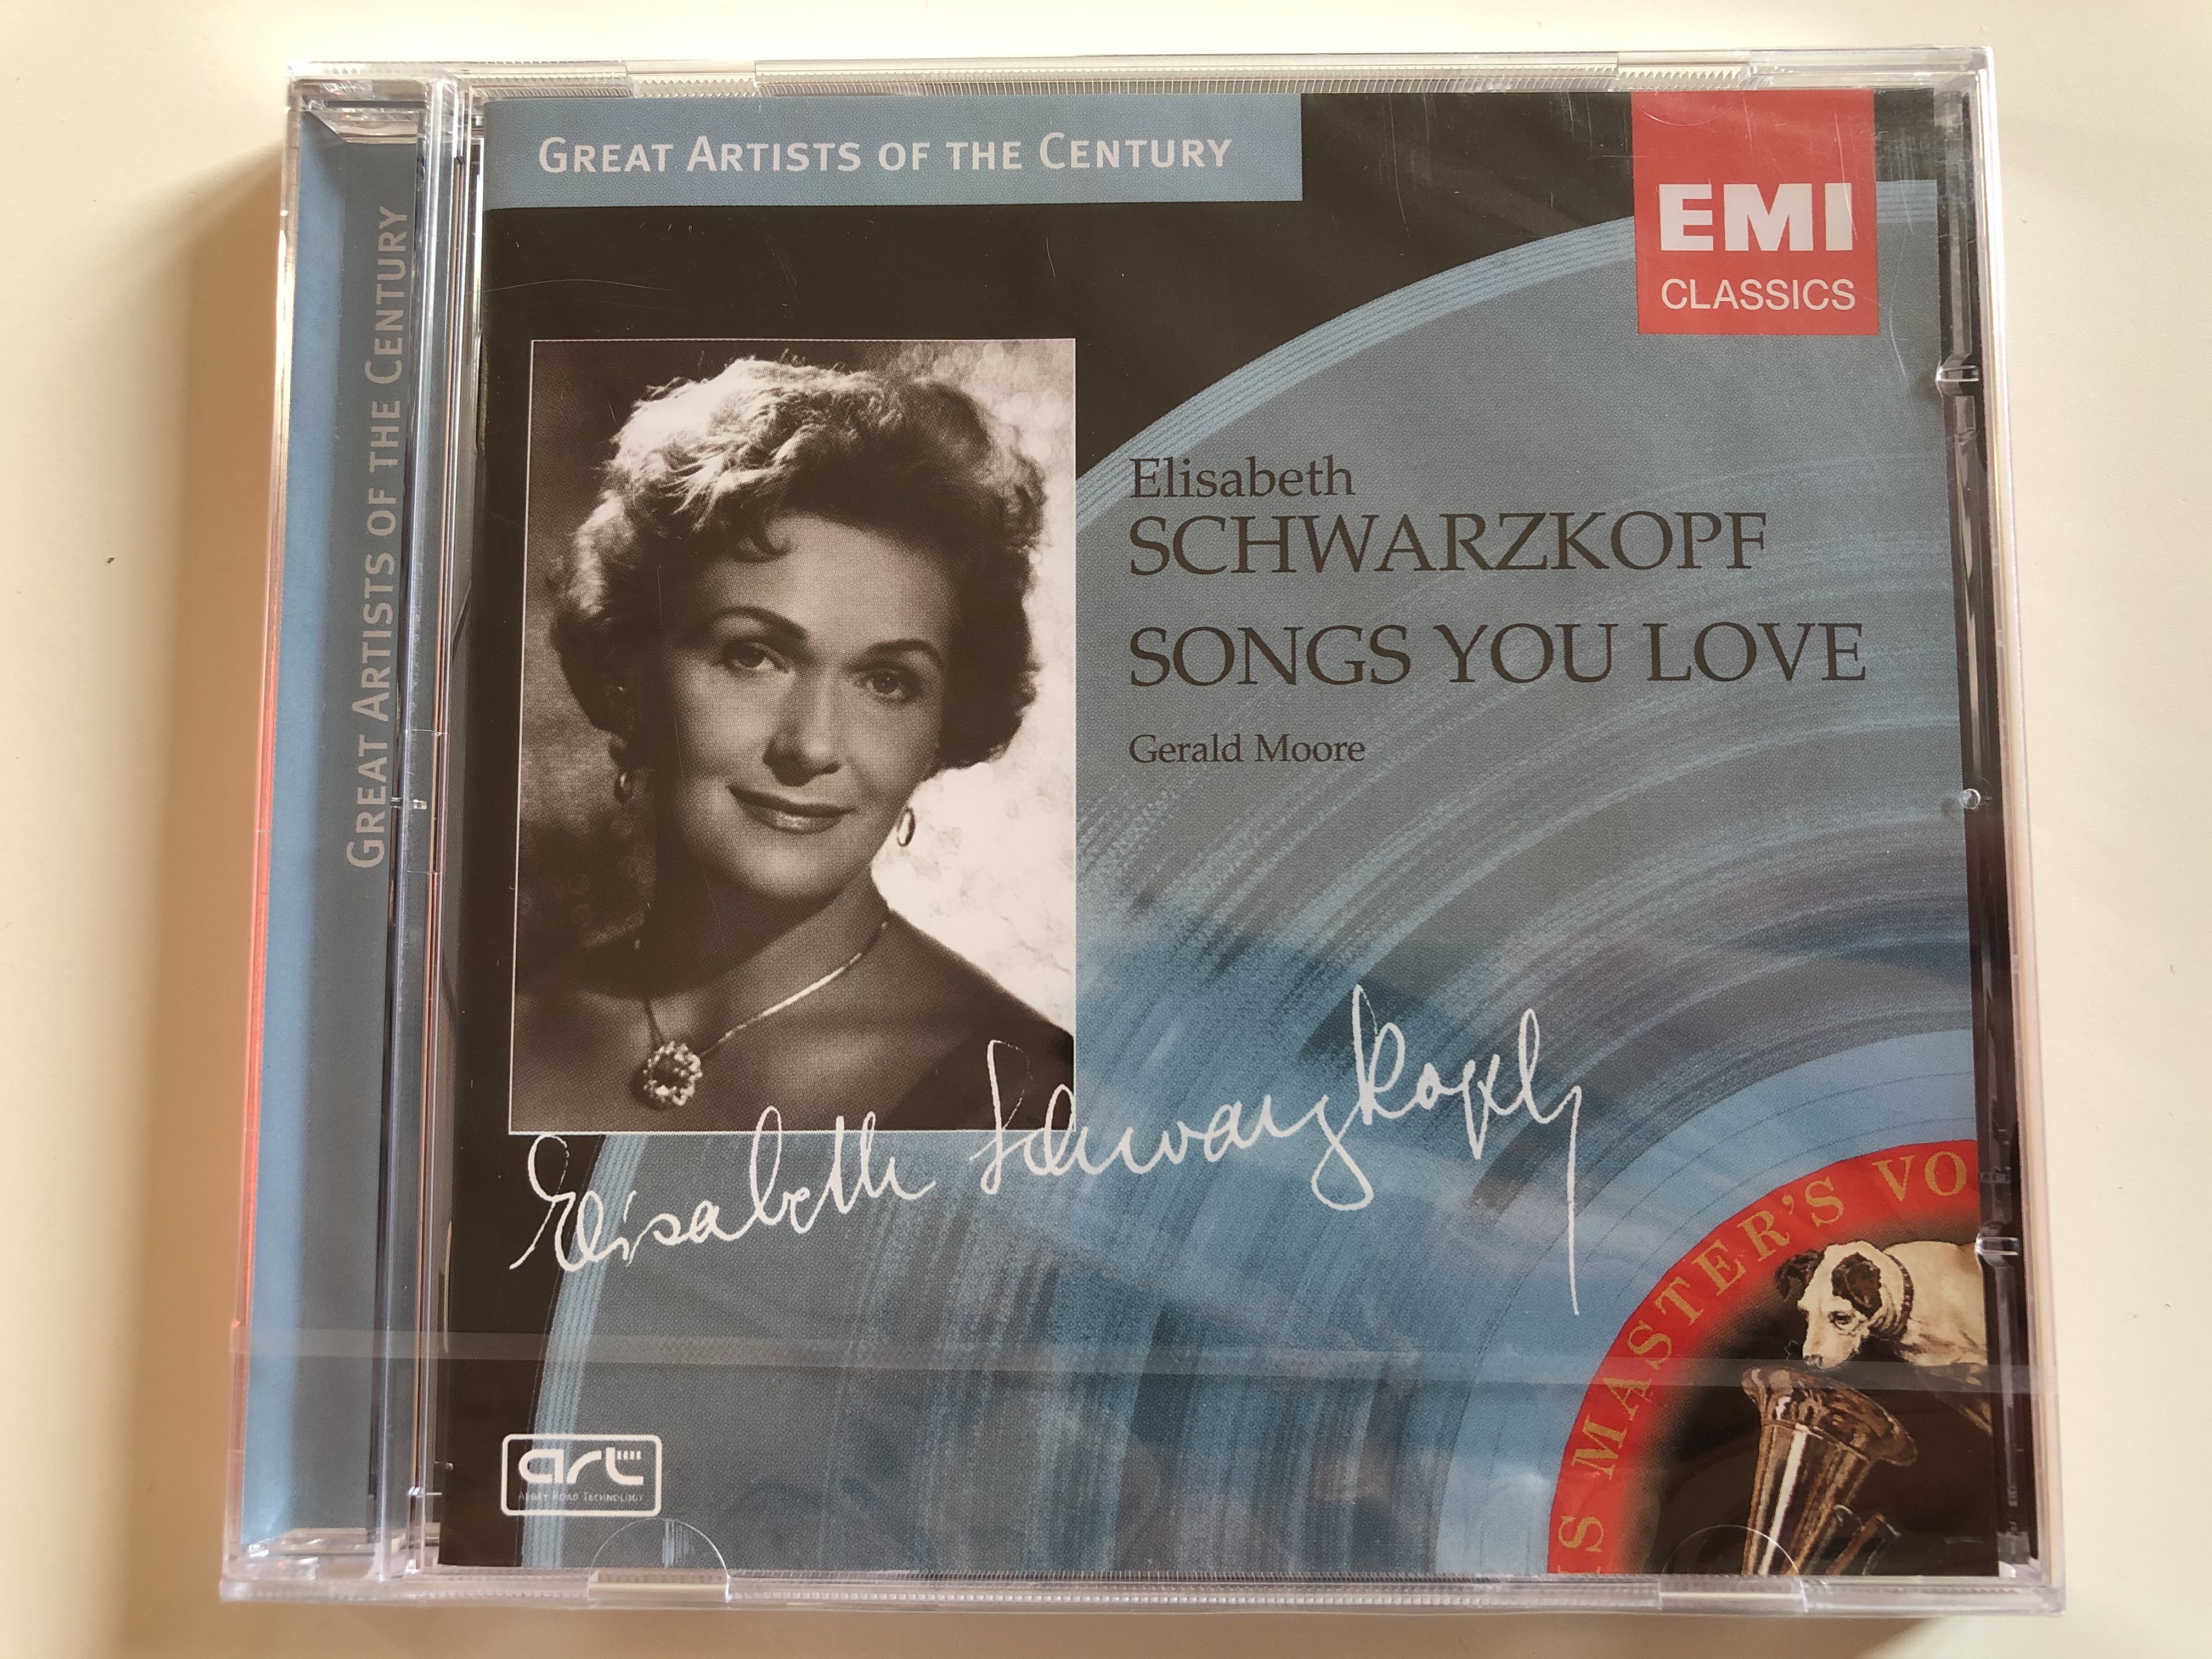 elisabeth-schwarzkopf-songs-you-love-gerald-moore-great-artists-of-the-century-emi-classics-audio-cd-2006-stereo-mono-094635652628-1-.jpg